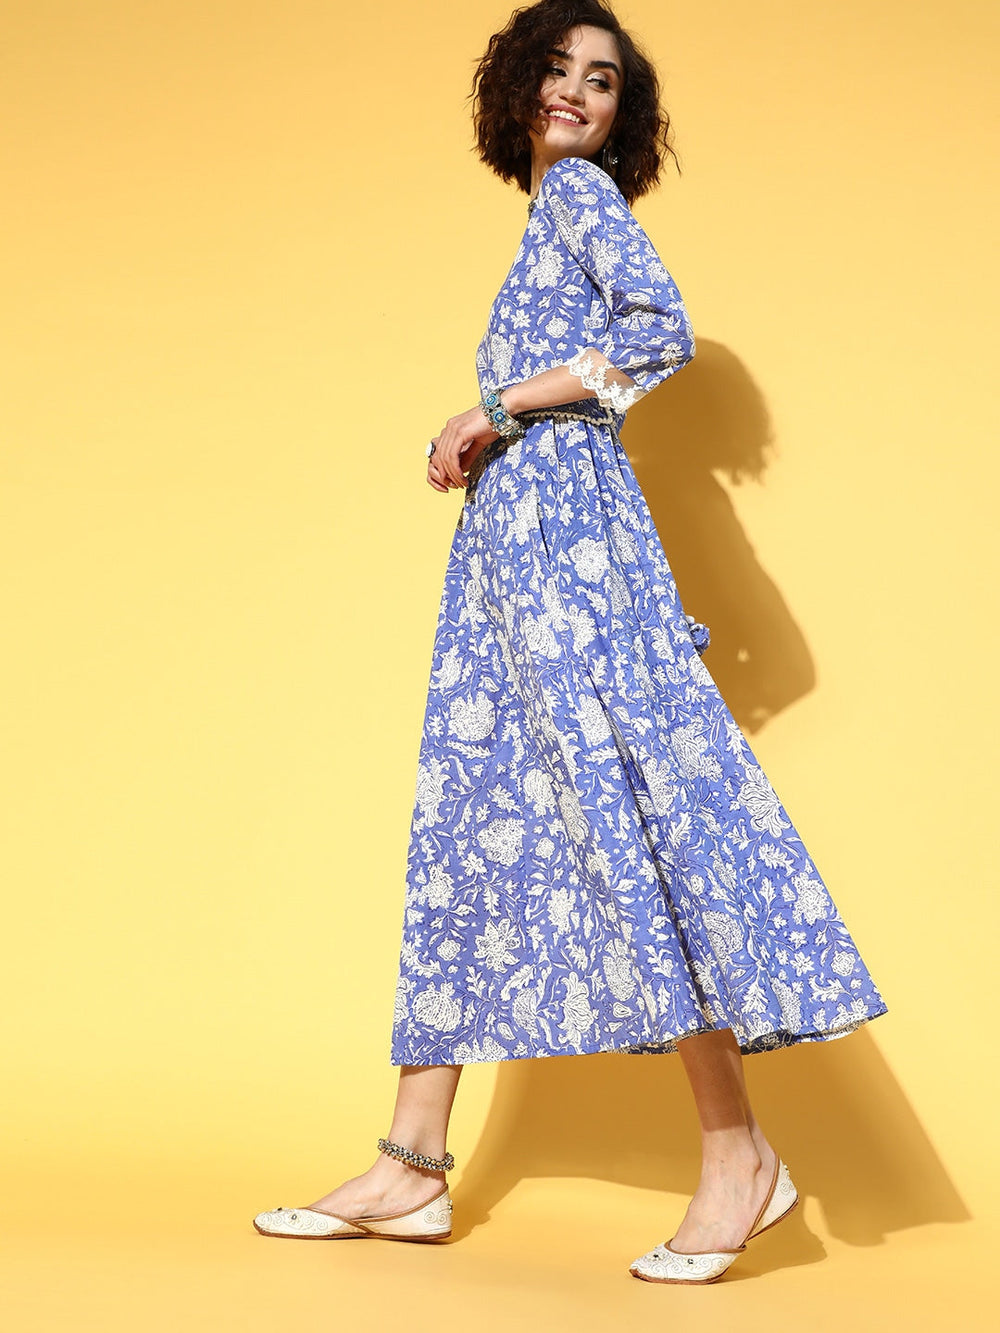 Blue Floral Ethnic Dress-Yufta Store-9504DRSBLS